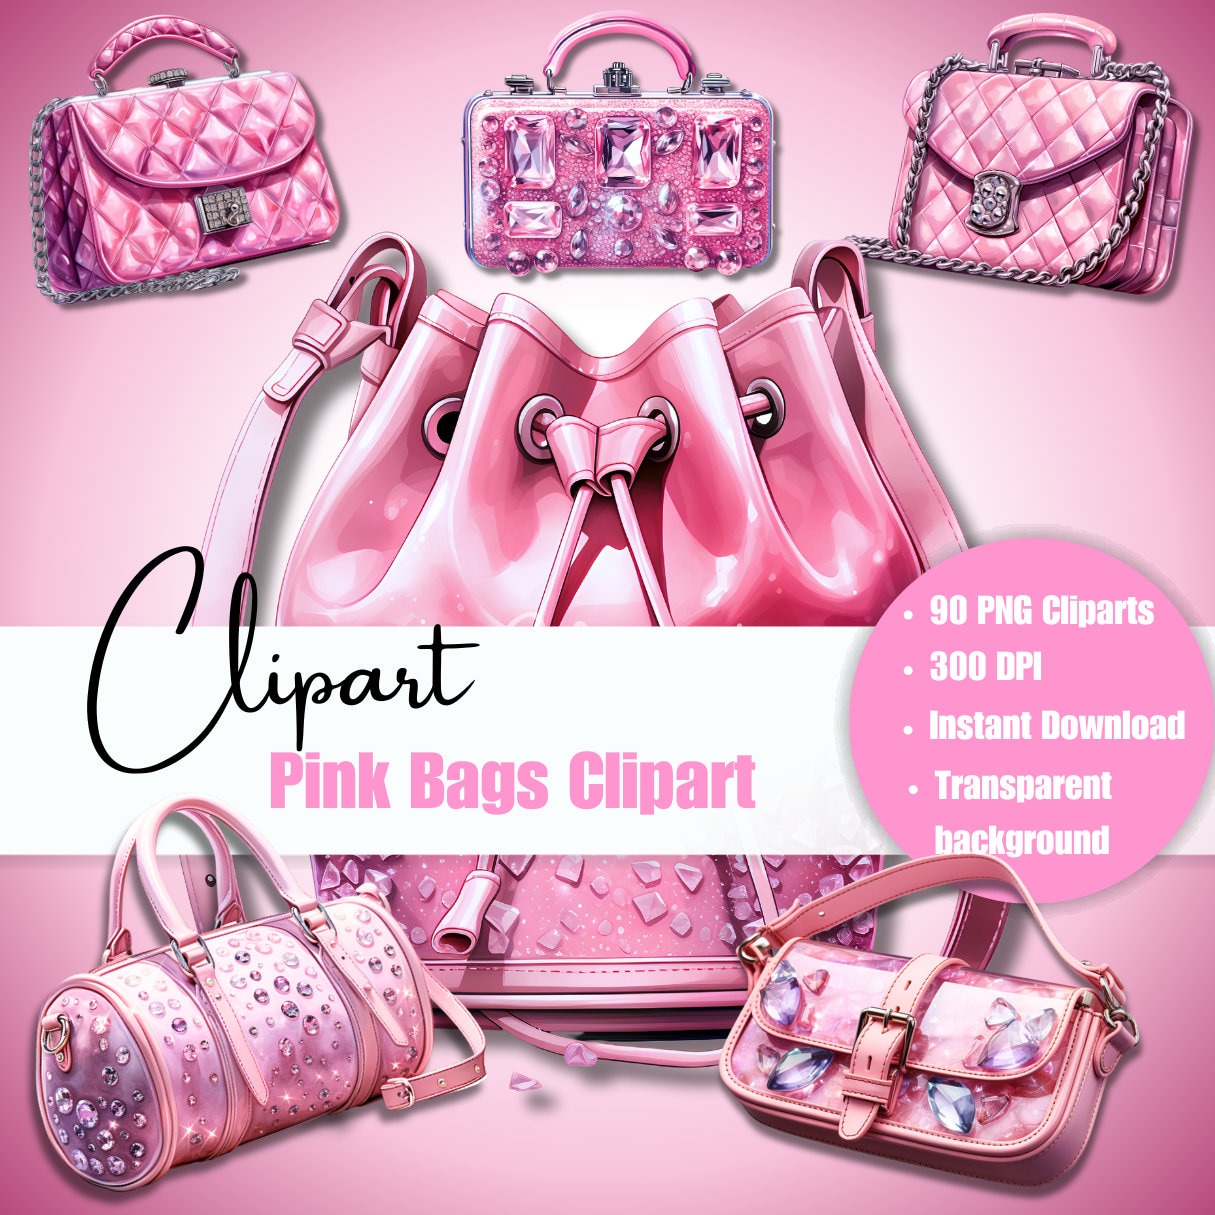 Handbag Clipart, Purse Clipart, Clip Art, Designer Bags, Fashion,  Scrapbooking, Party Invitations, Graphics, PNG JPEG, Download 